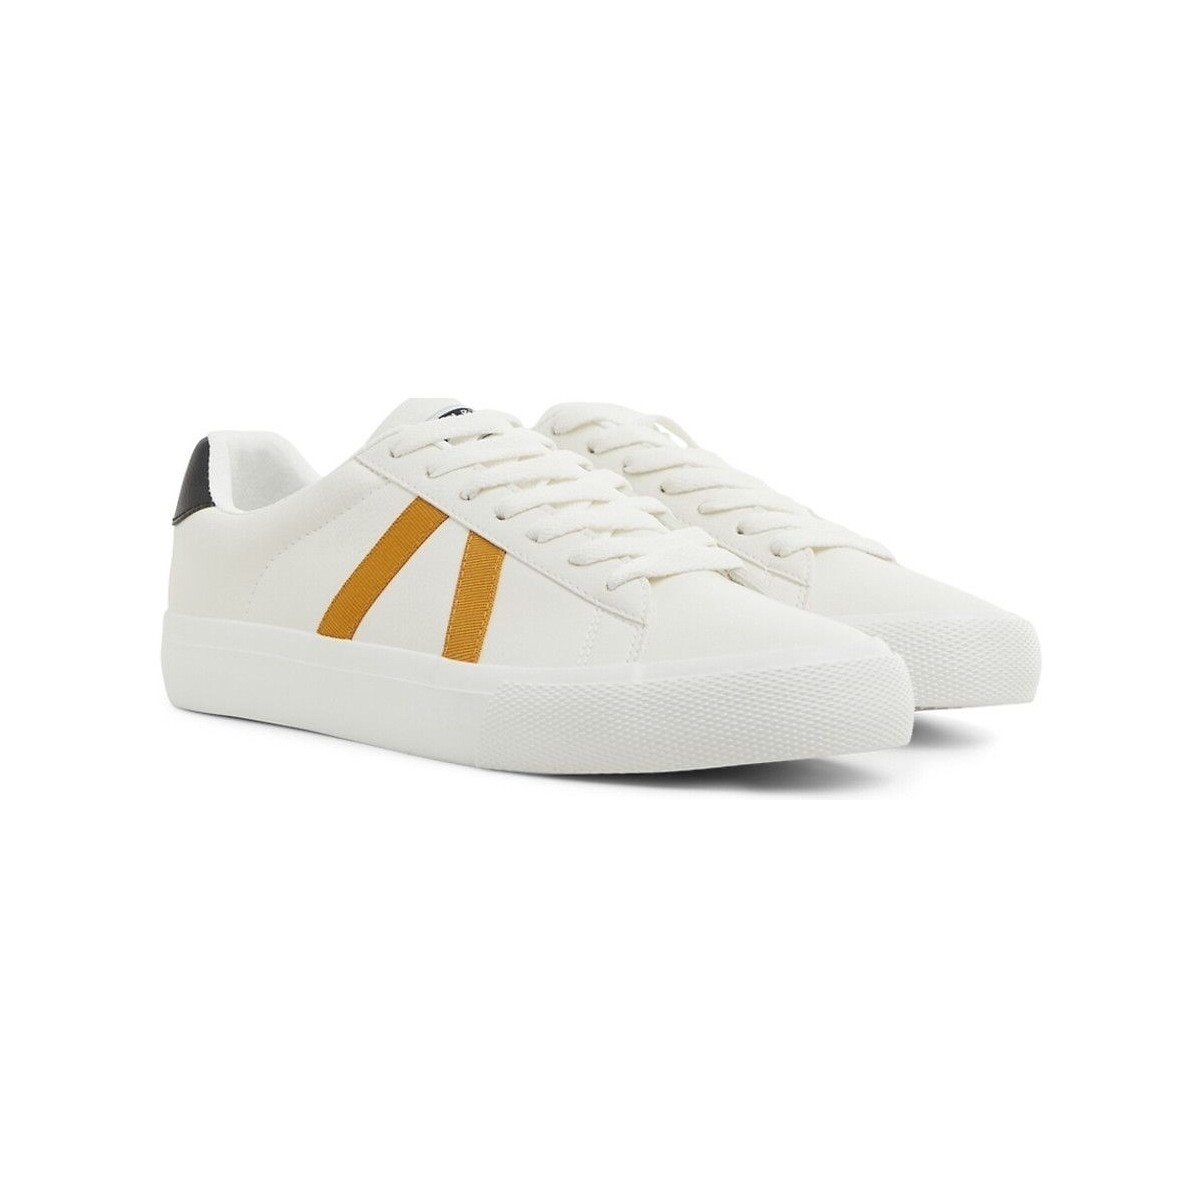 Sapatos Homem Sapatilhas Jack & Jones 12230427 FREEMAN-BRIGHT WHITE GOLDEN Branco